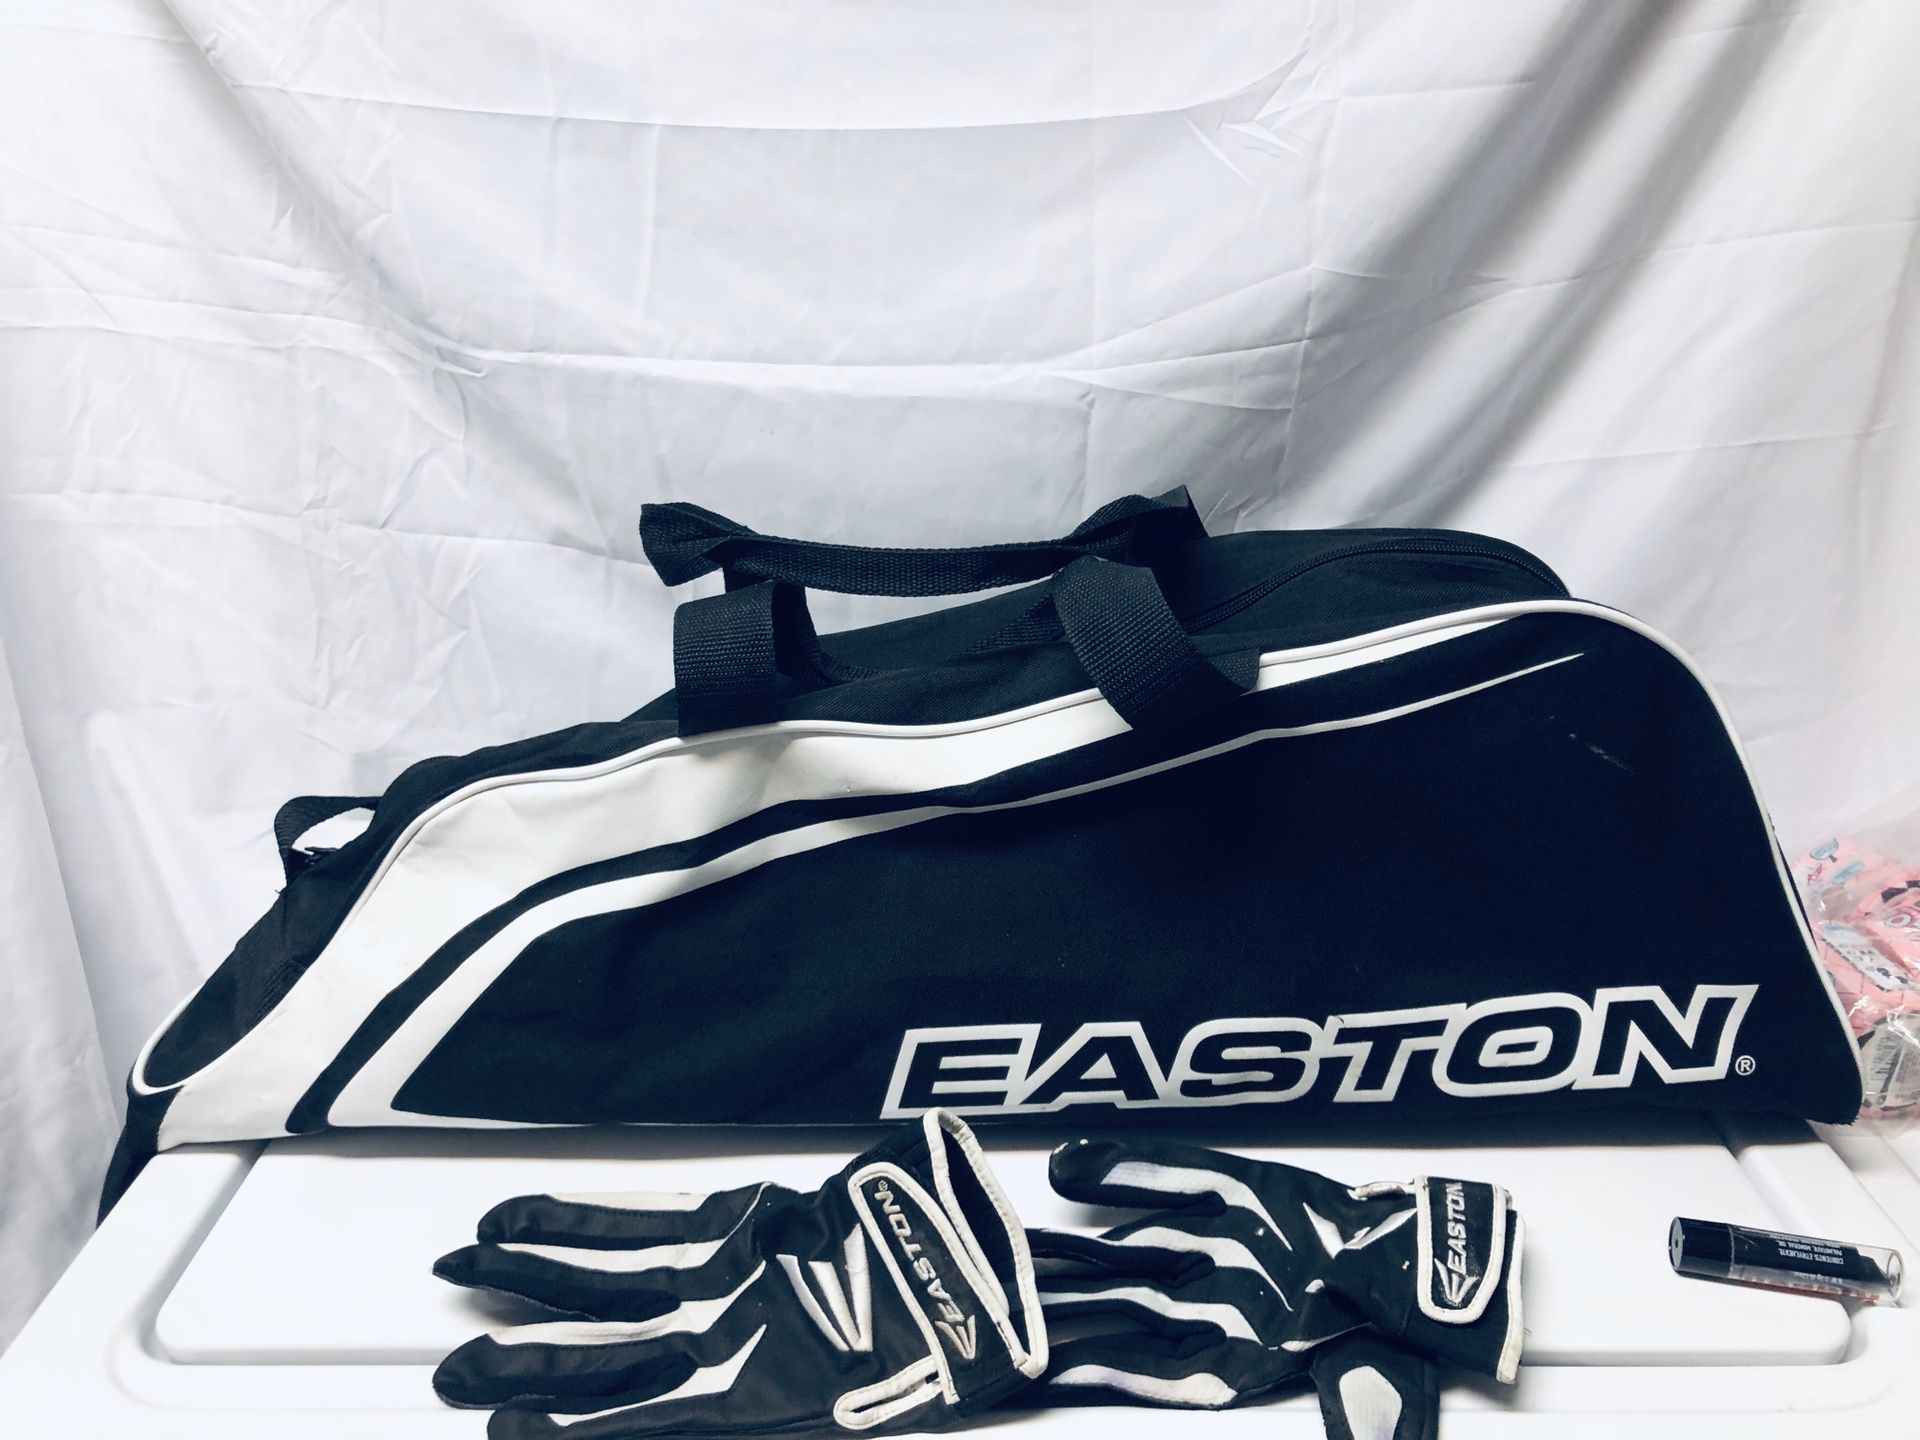 Easton Bat Bag with Easton batting gloves & Wilson Eye Black Stick